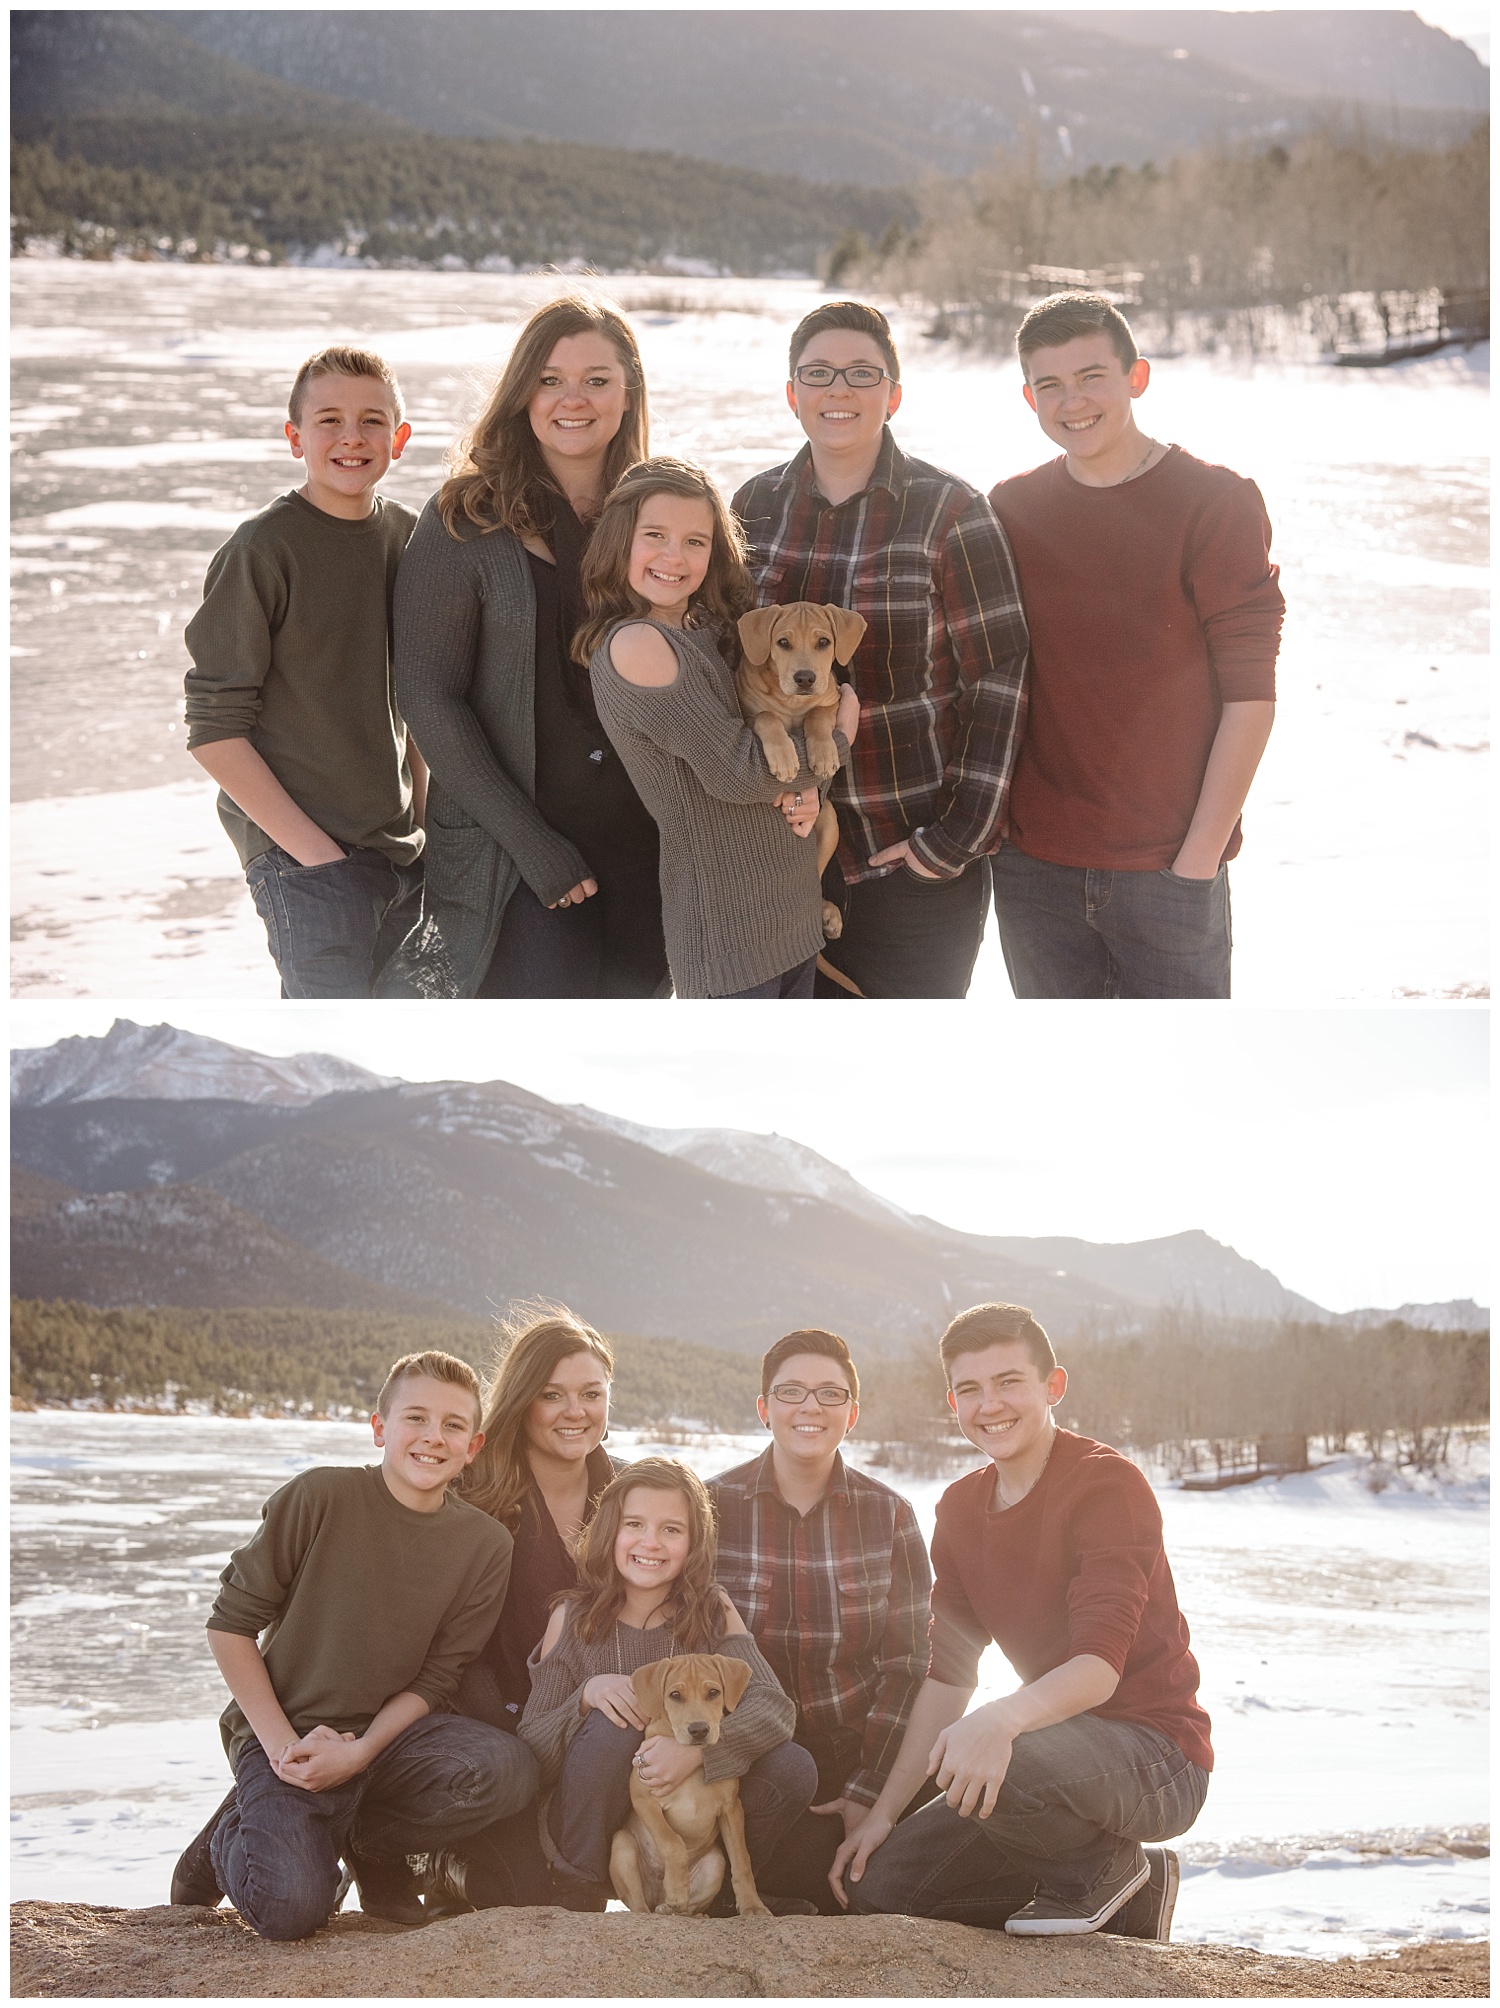 Young Family Posing 2 Moms | Jenny and Tara's Epic Mountain Engagement Session | Pikes Peak, Colorado Photography | Farm Wedding Photographer | Apollo Fields Wedding Photojournalism